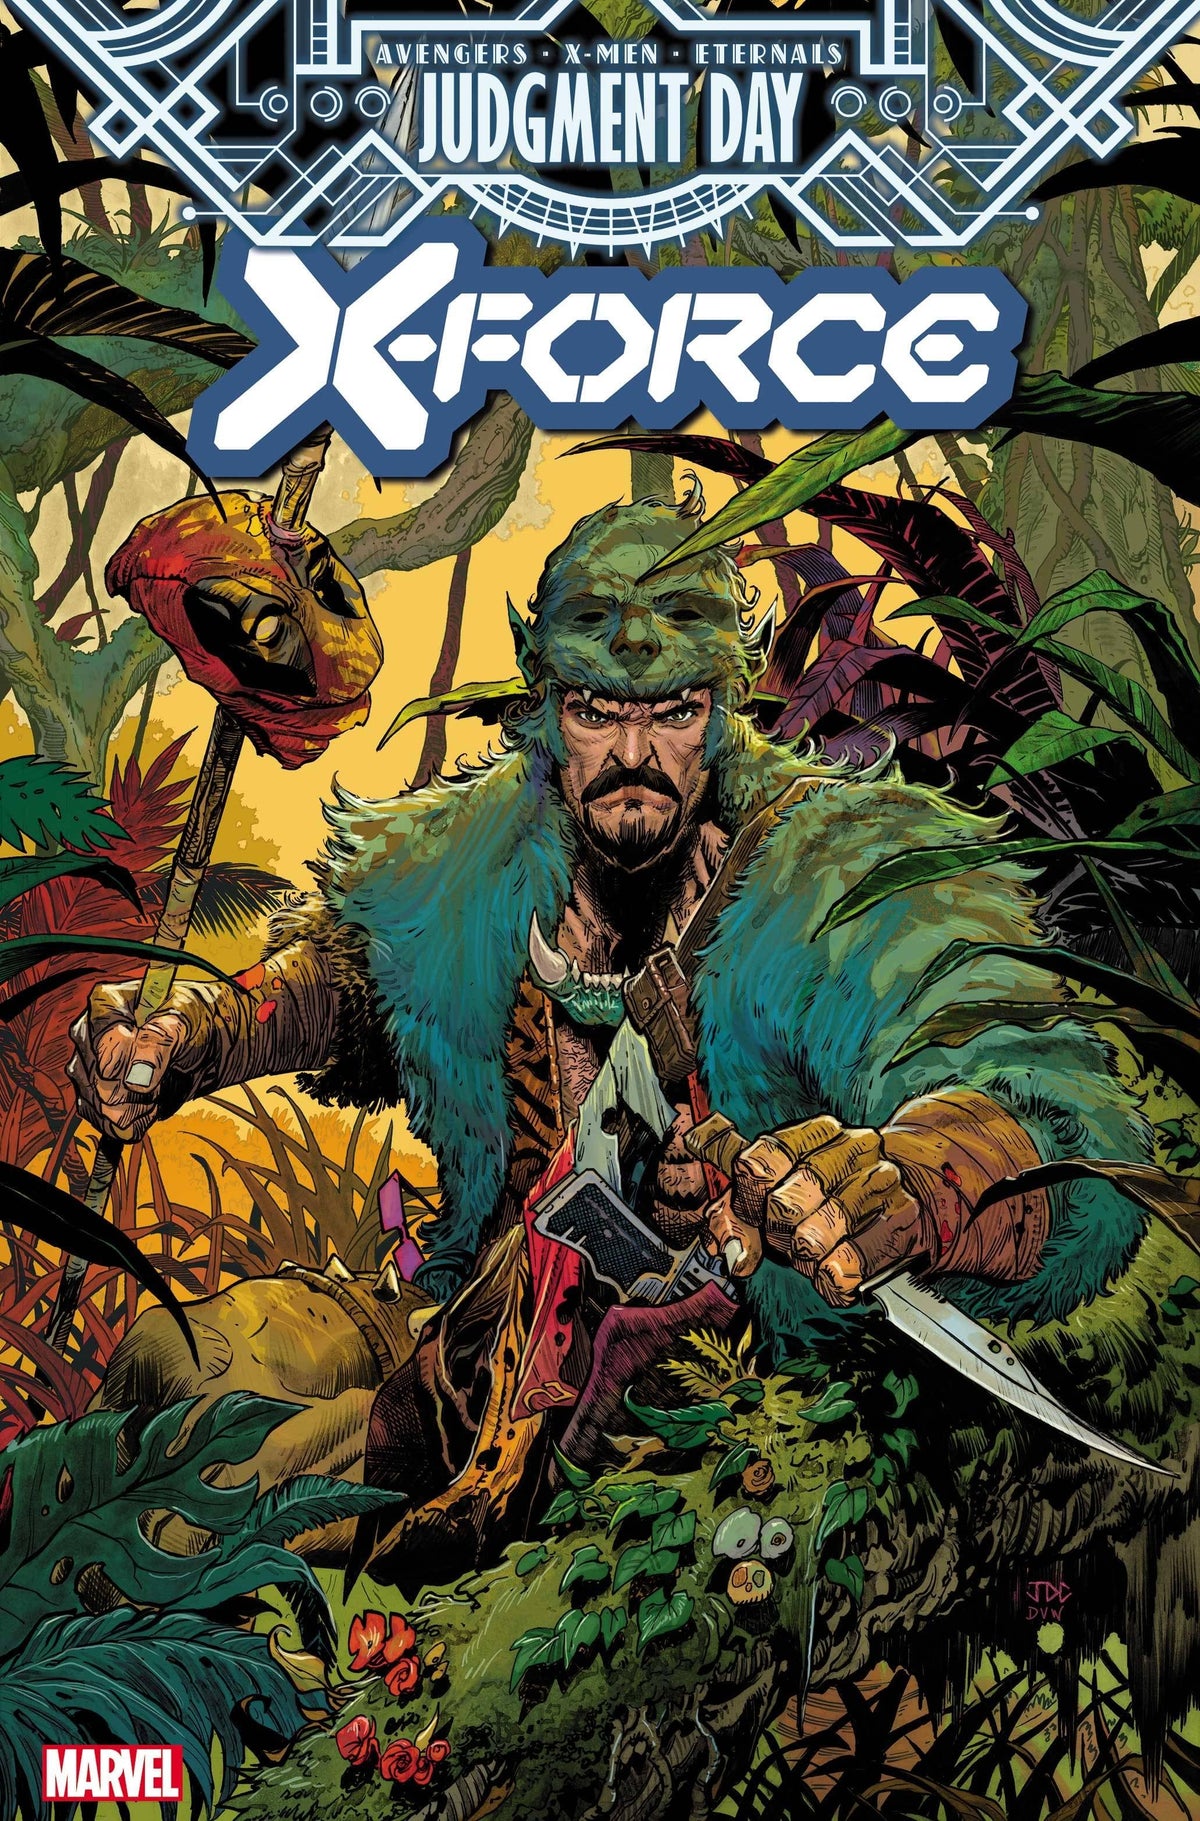 X-FORCE #31 - Third Eye